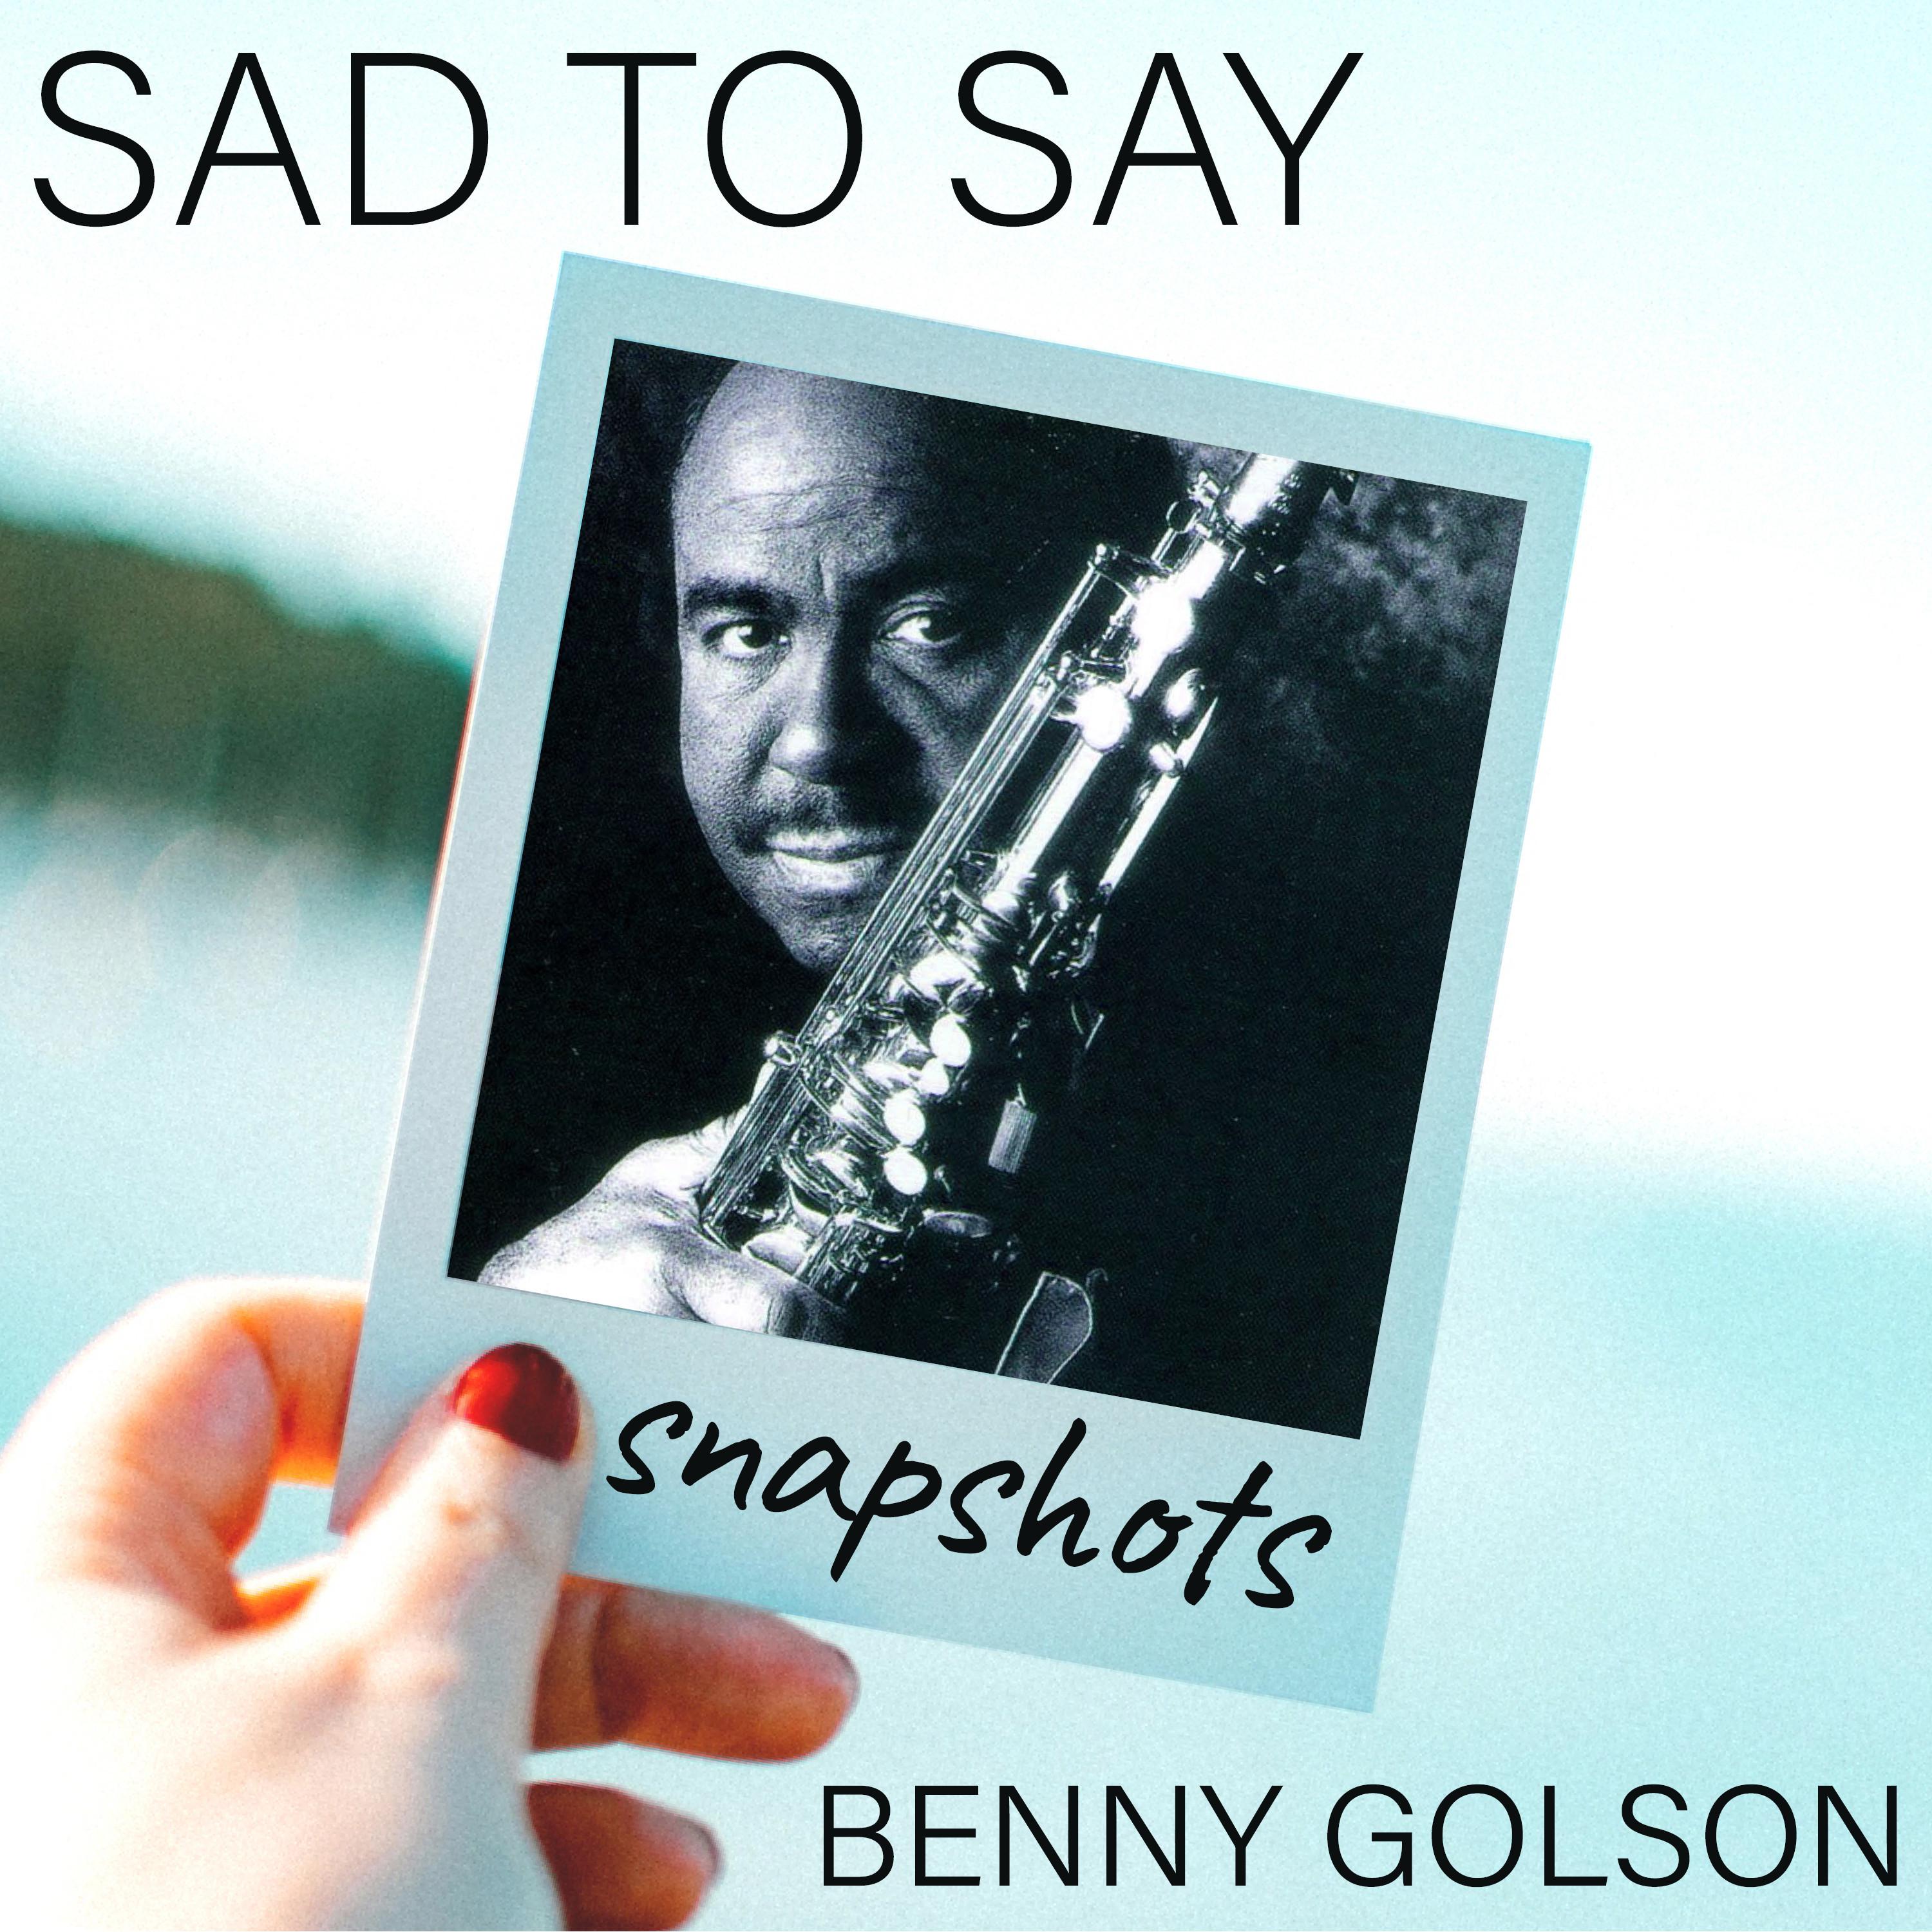 Benny Golson - Sad to Say (Snapshot - vocal theme)